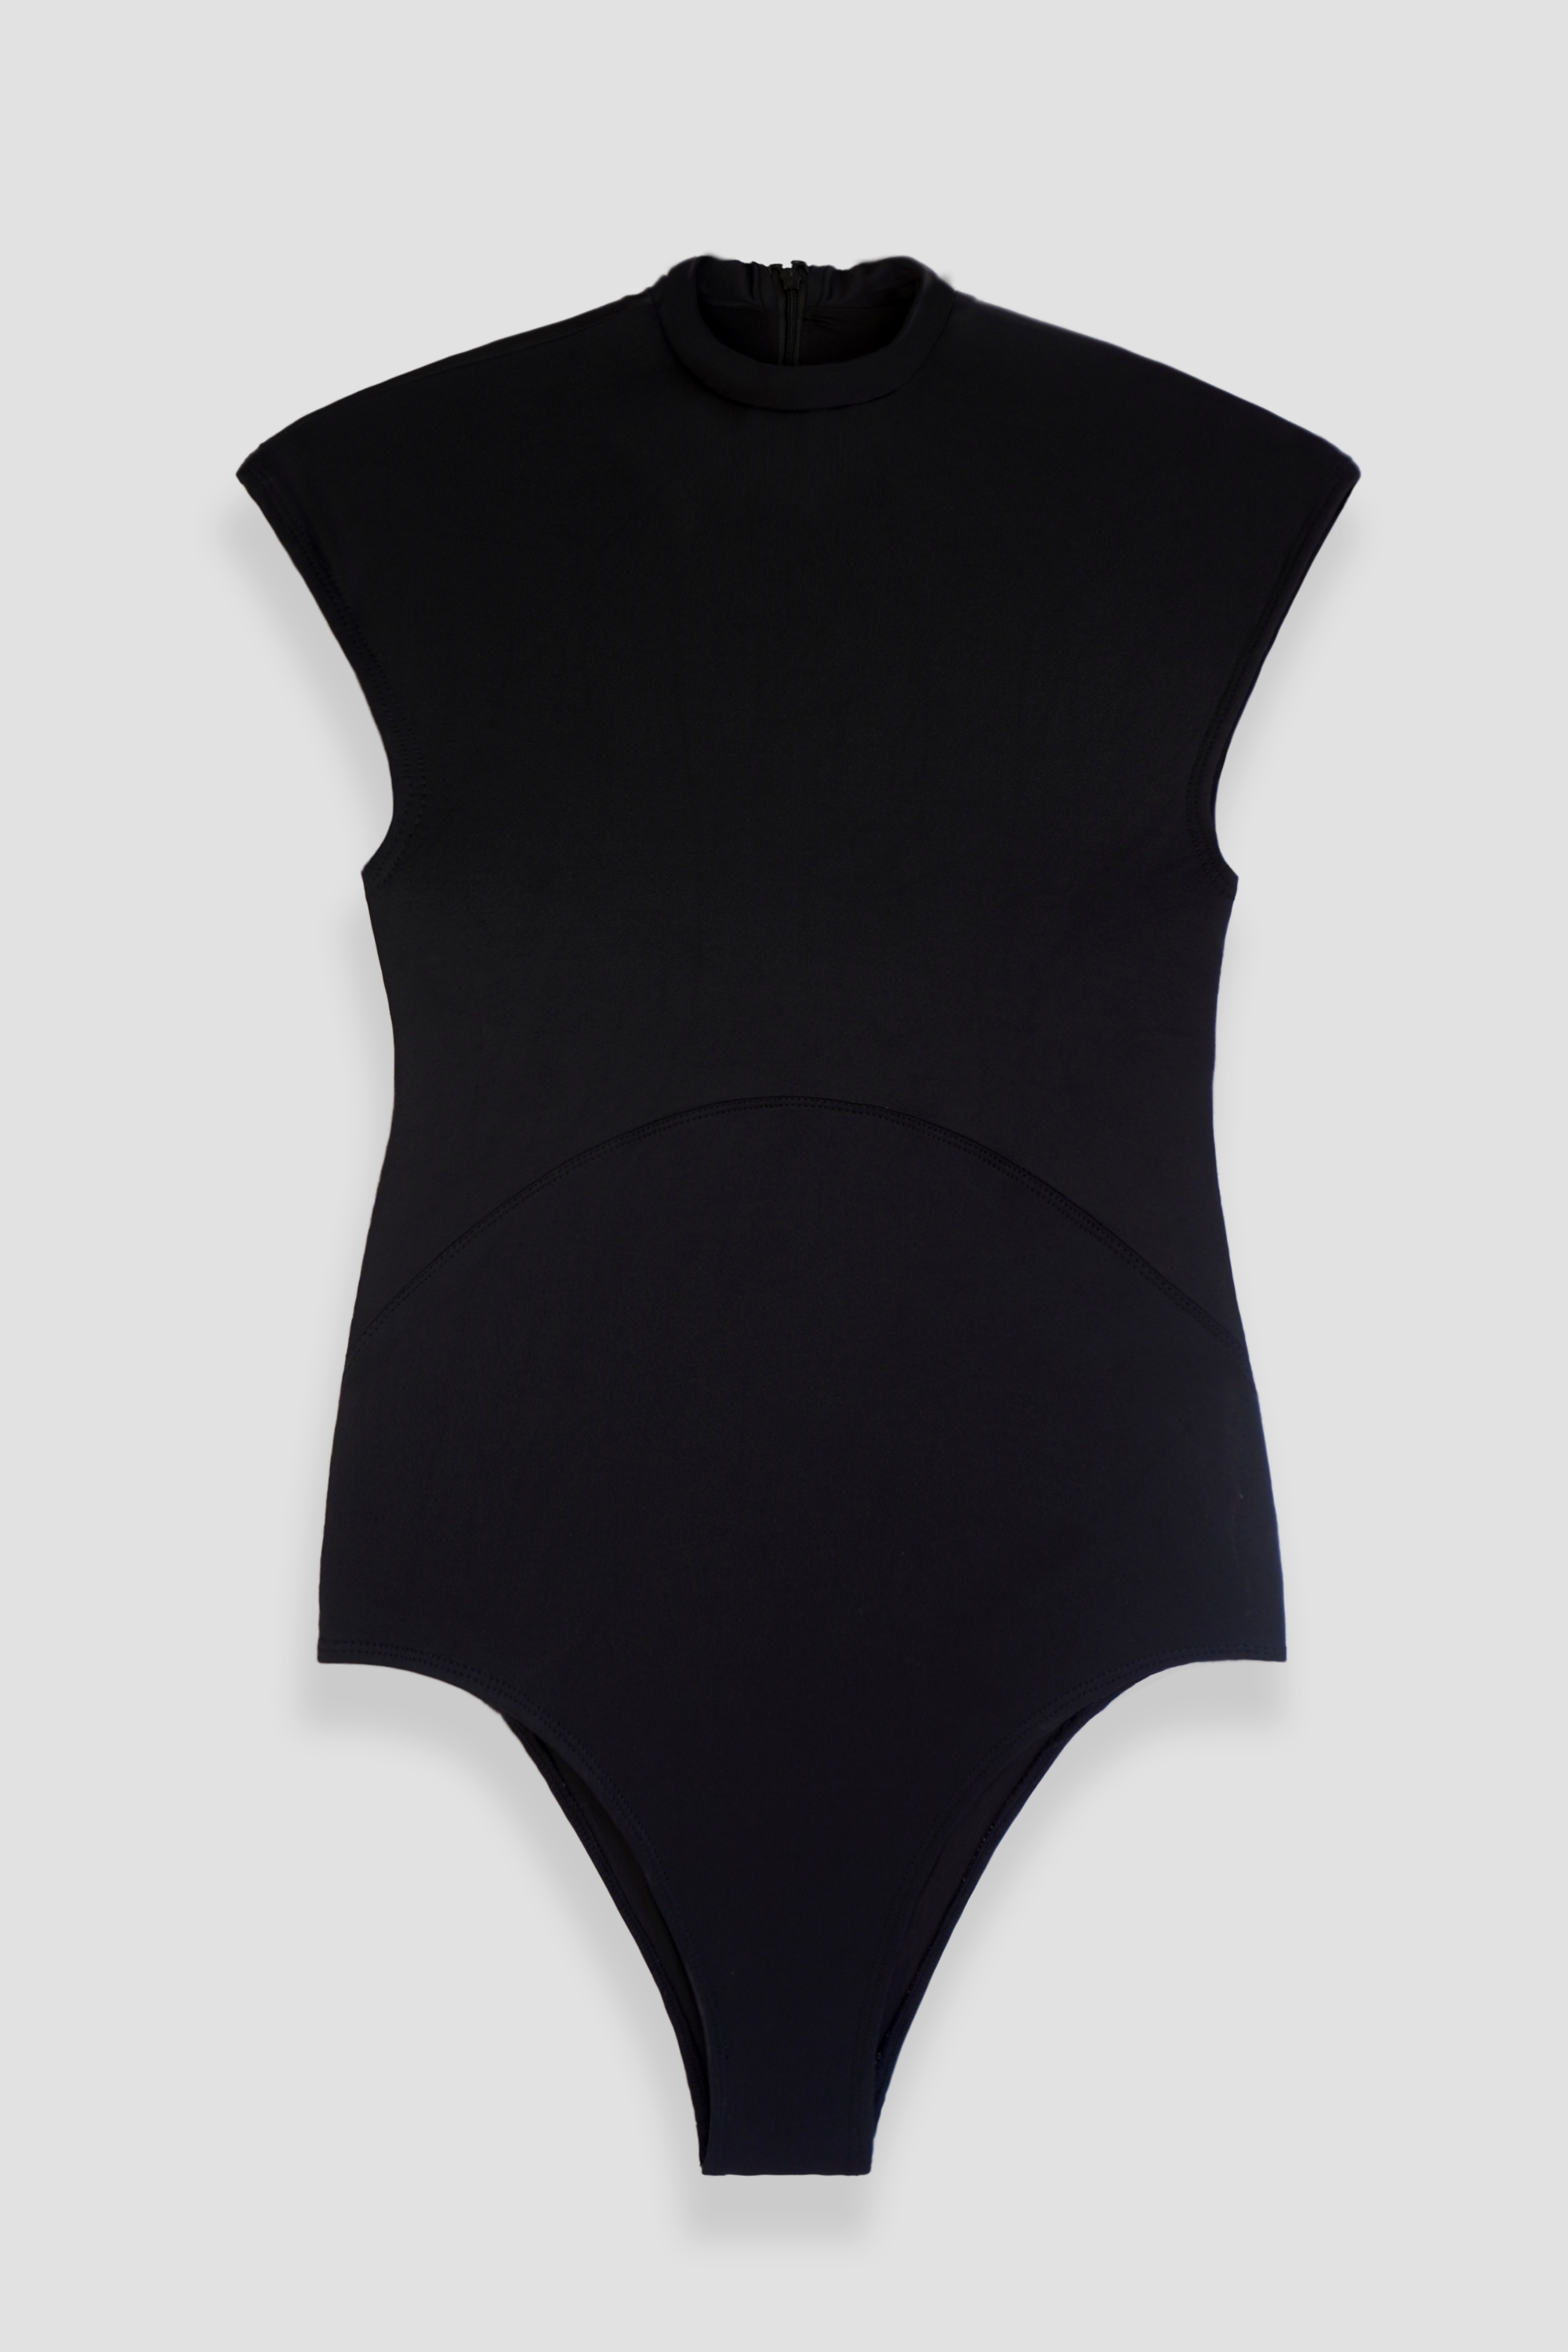 Ninefoot Studio Marosi surf swimsuit onepiece in Black | One piece